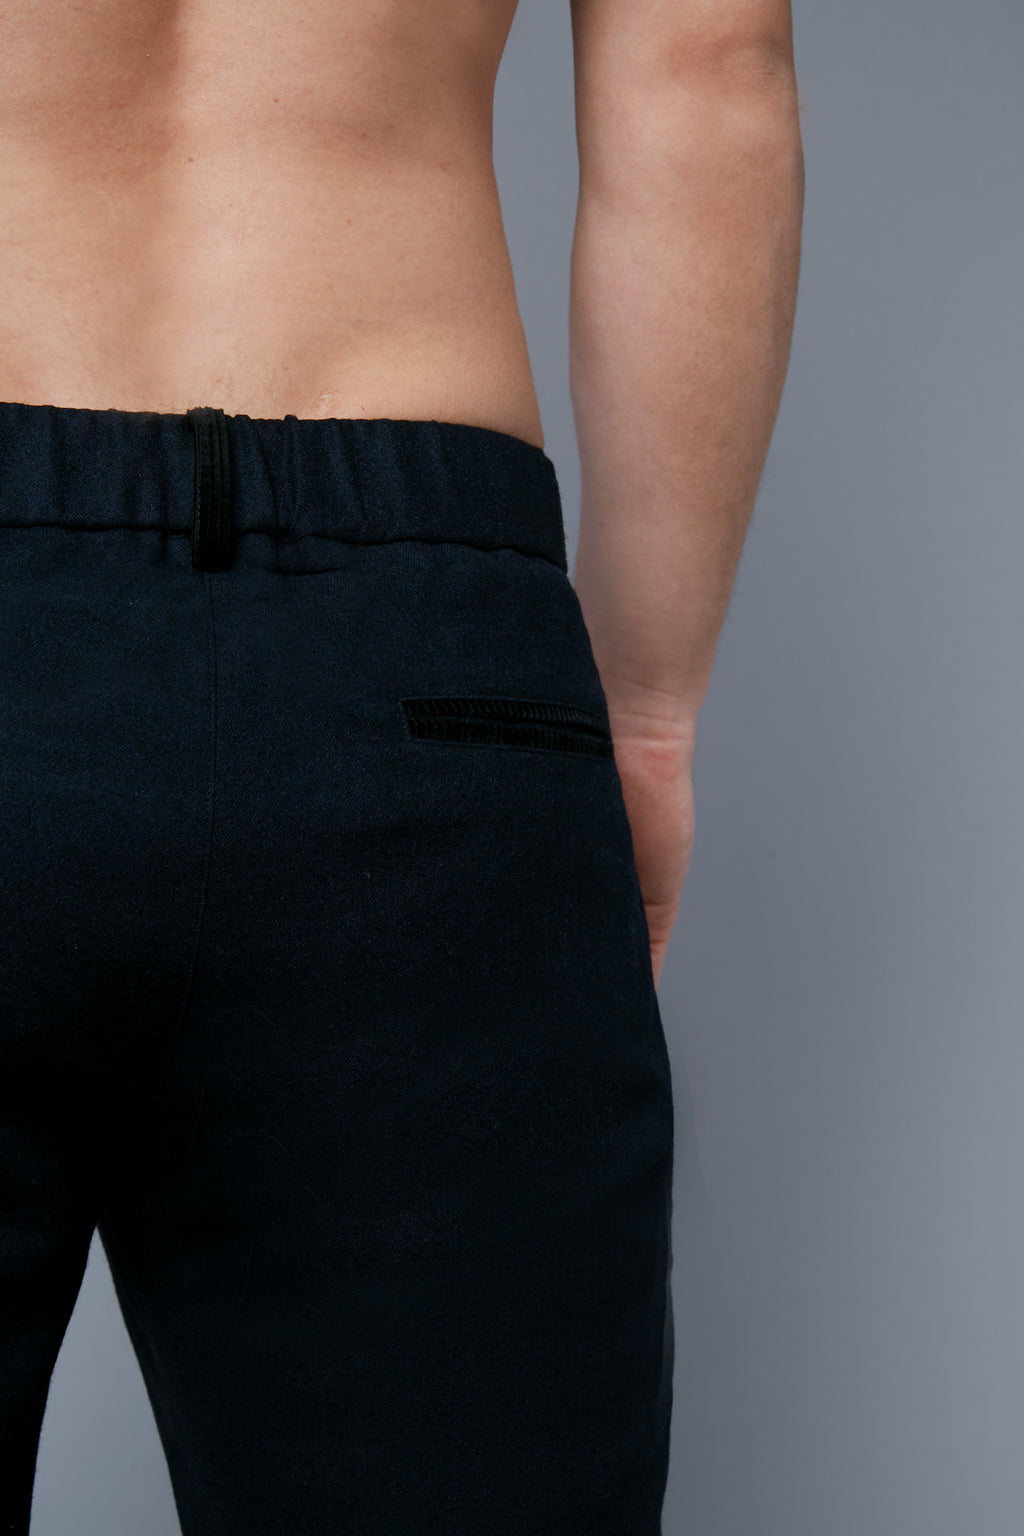 Detail View: Model Milos Drago wearing Sweatpants